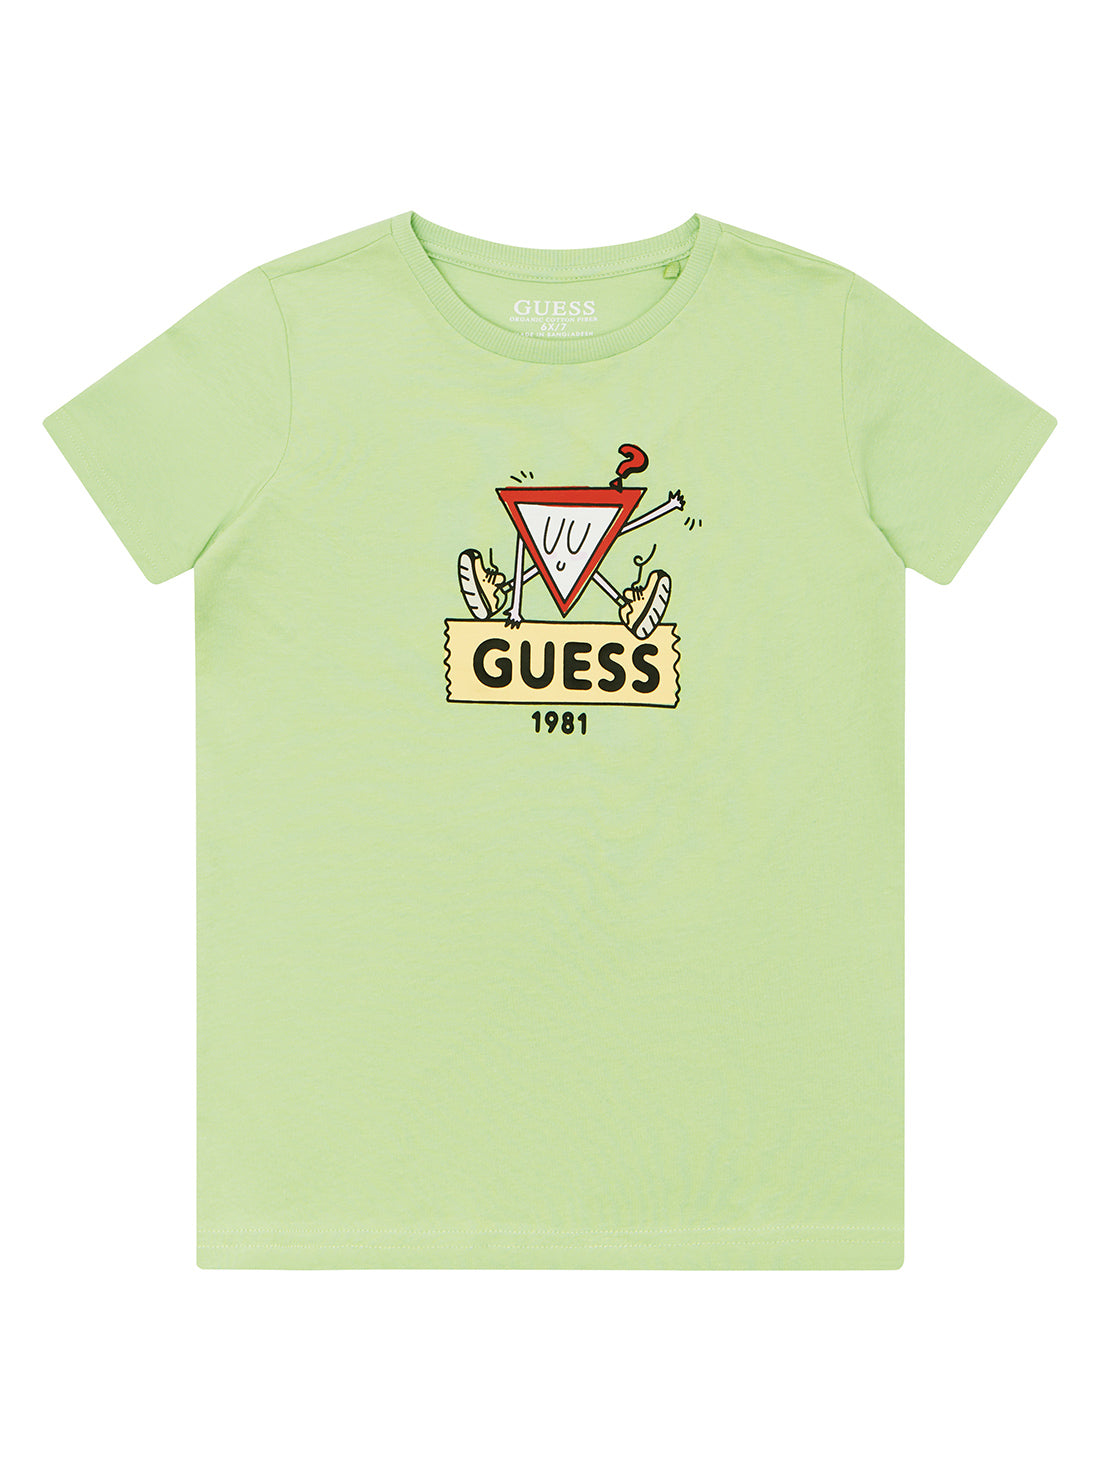 GUESS Little Boy Green Spring Graphic Logo T-Shirt (3-7) N2YI02K8HM0 Front View